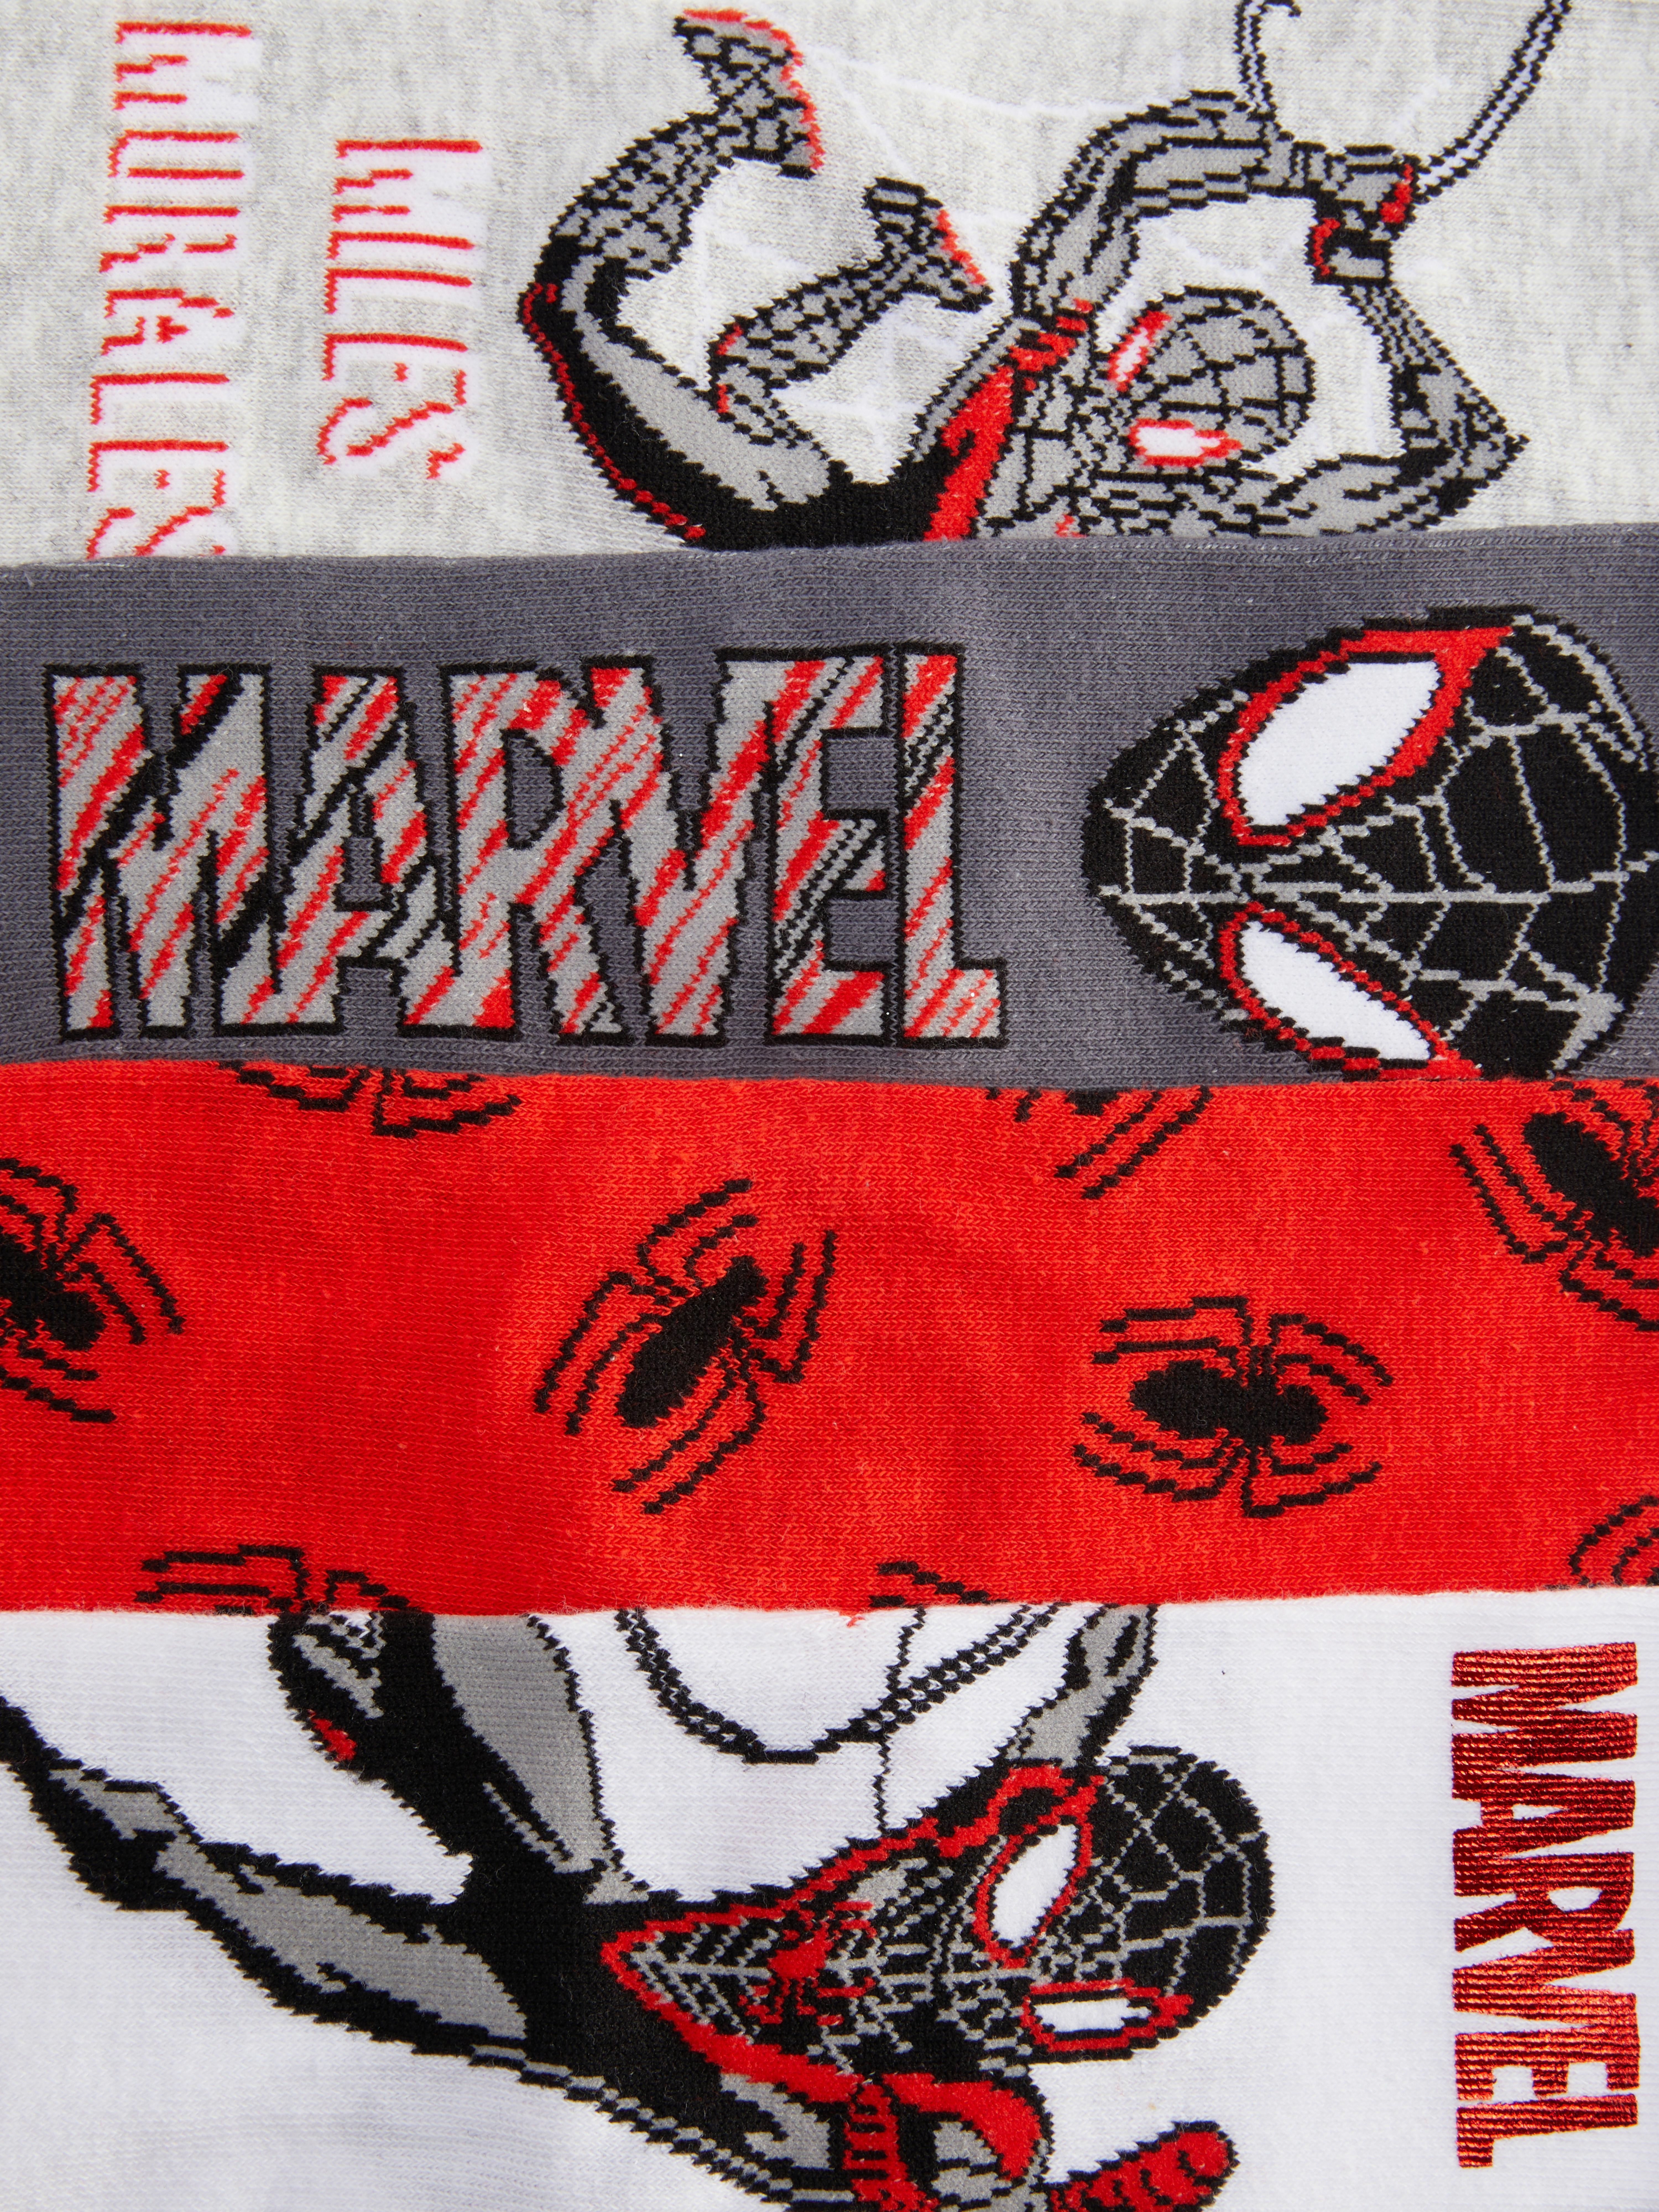 4-Pack Marvel Miles Morales Socks